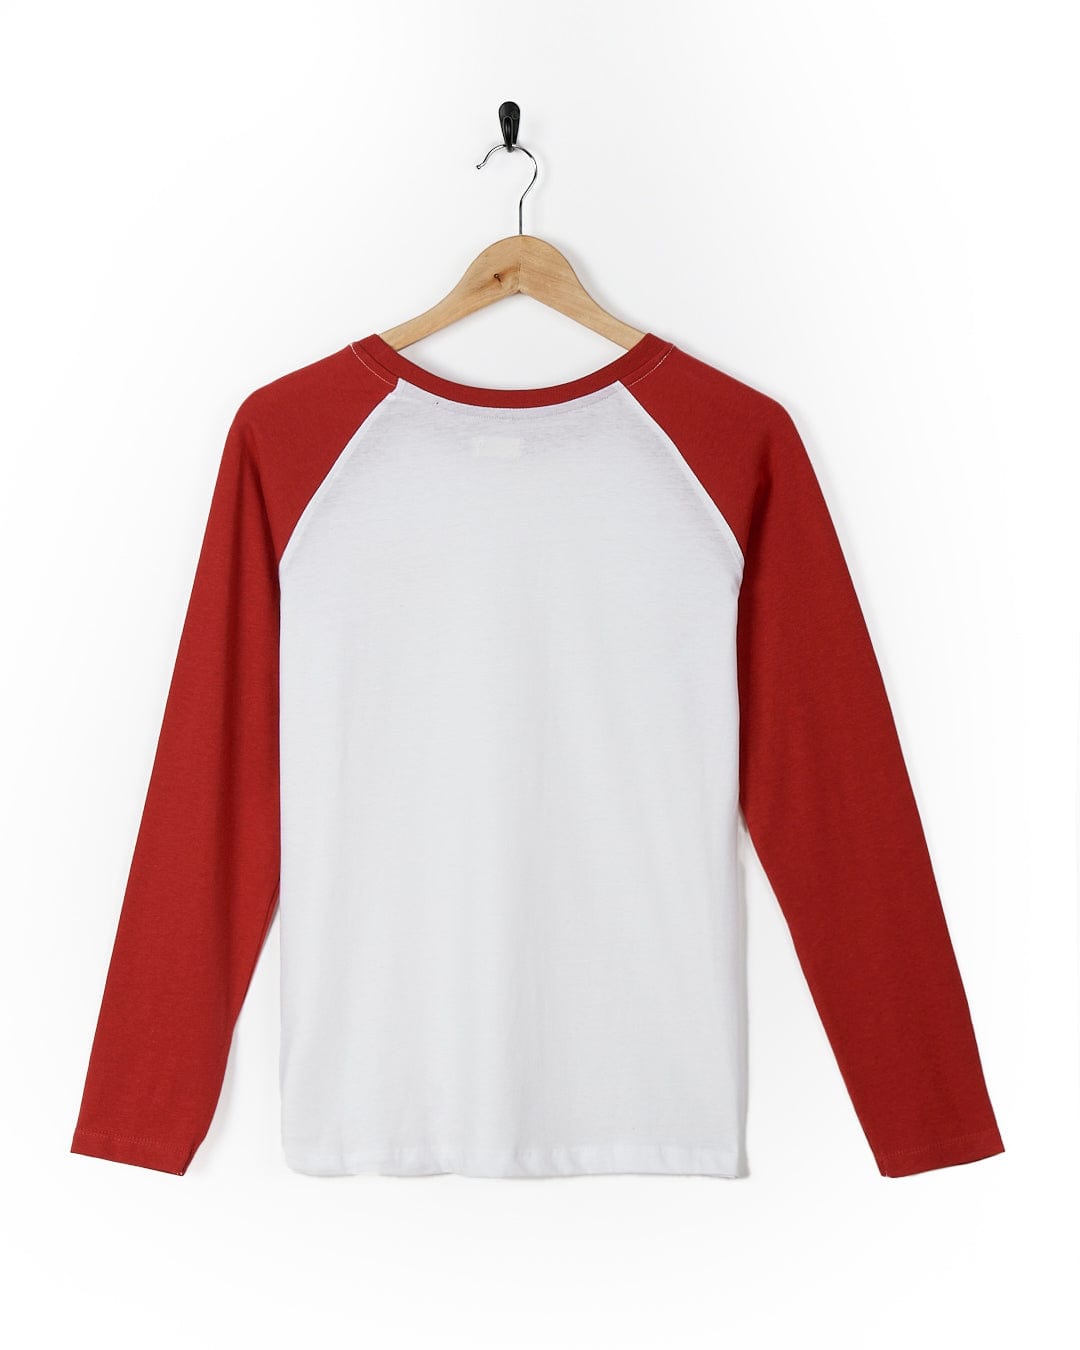 A Saltrock Carolina - Womens Long Sleeve Raglan T-Shirt - Red/White hanging on a wooden hanger.